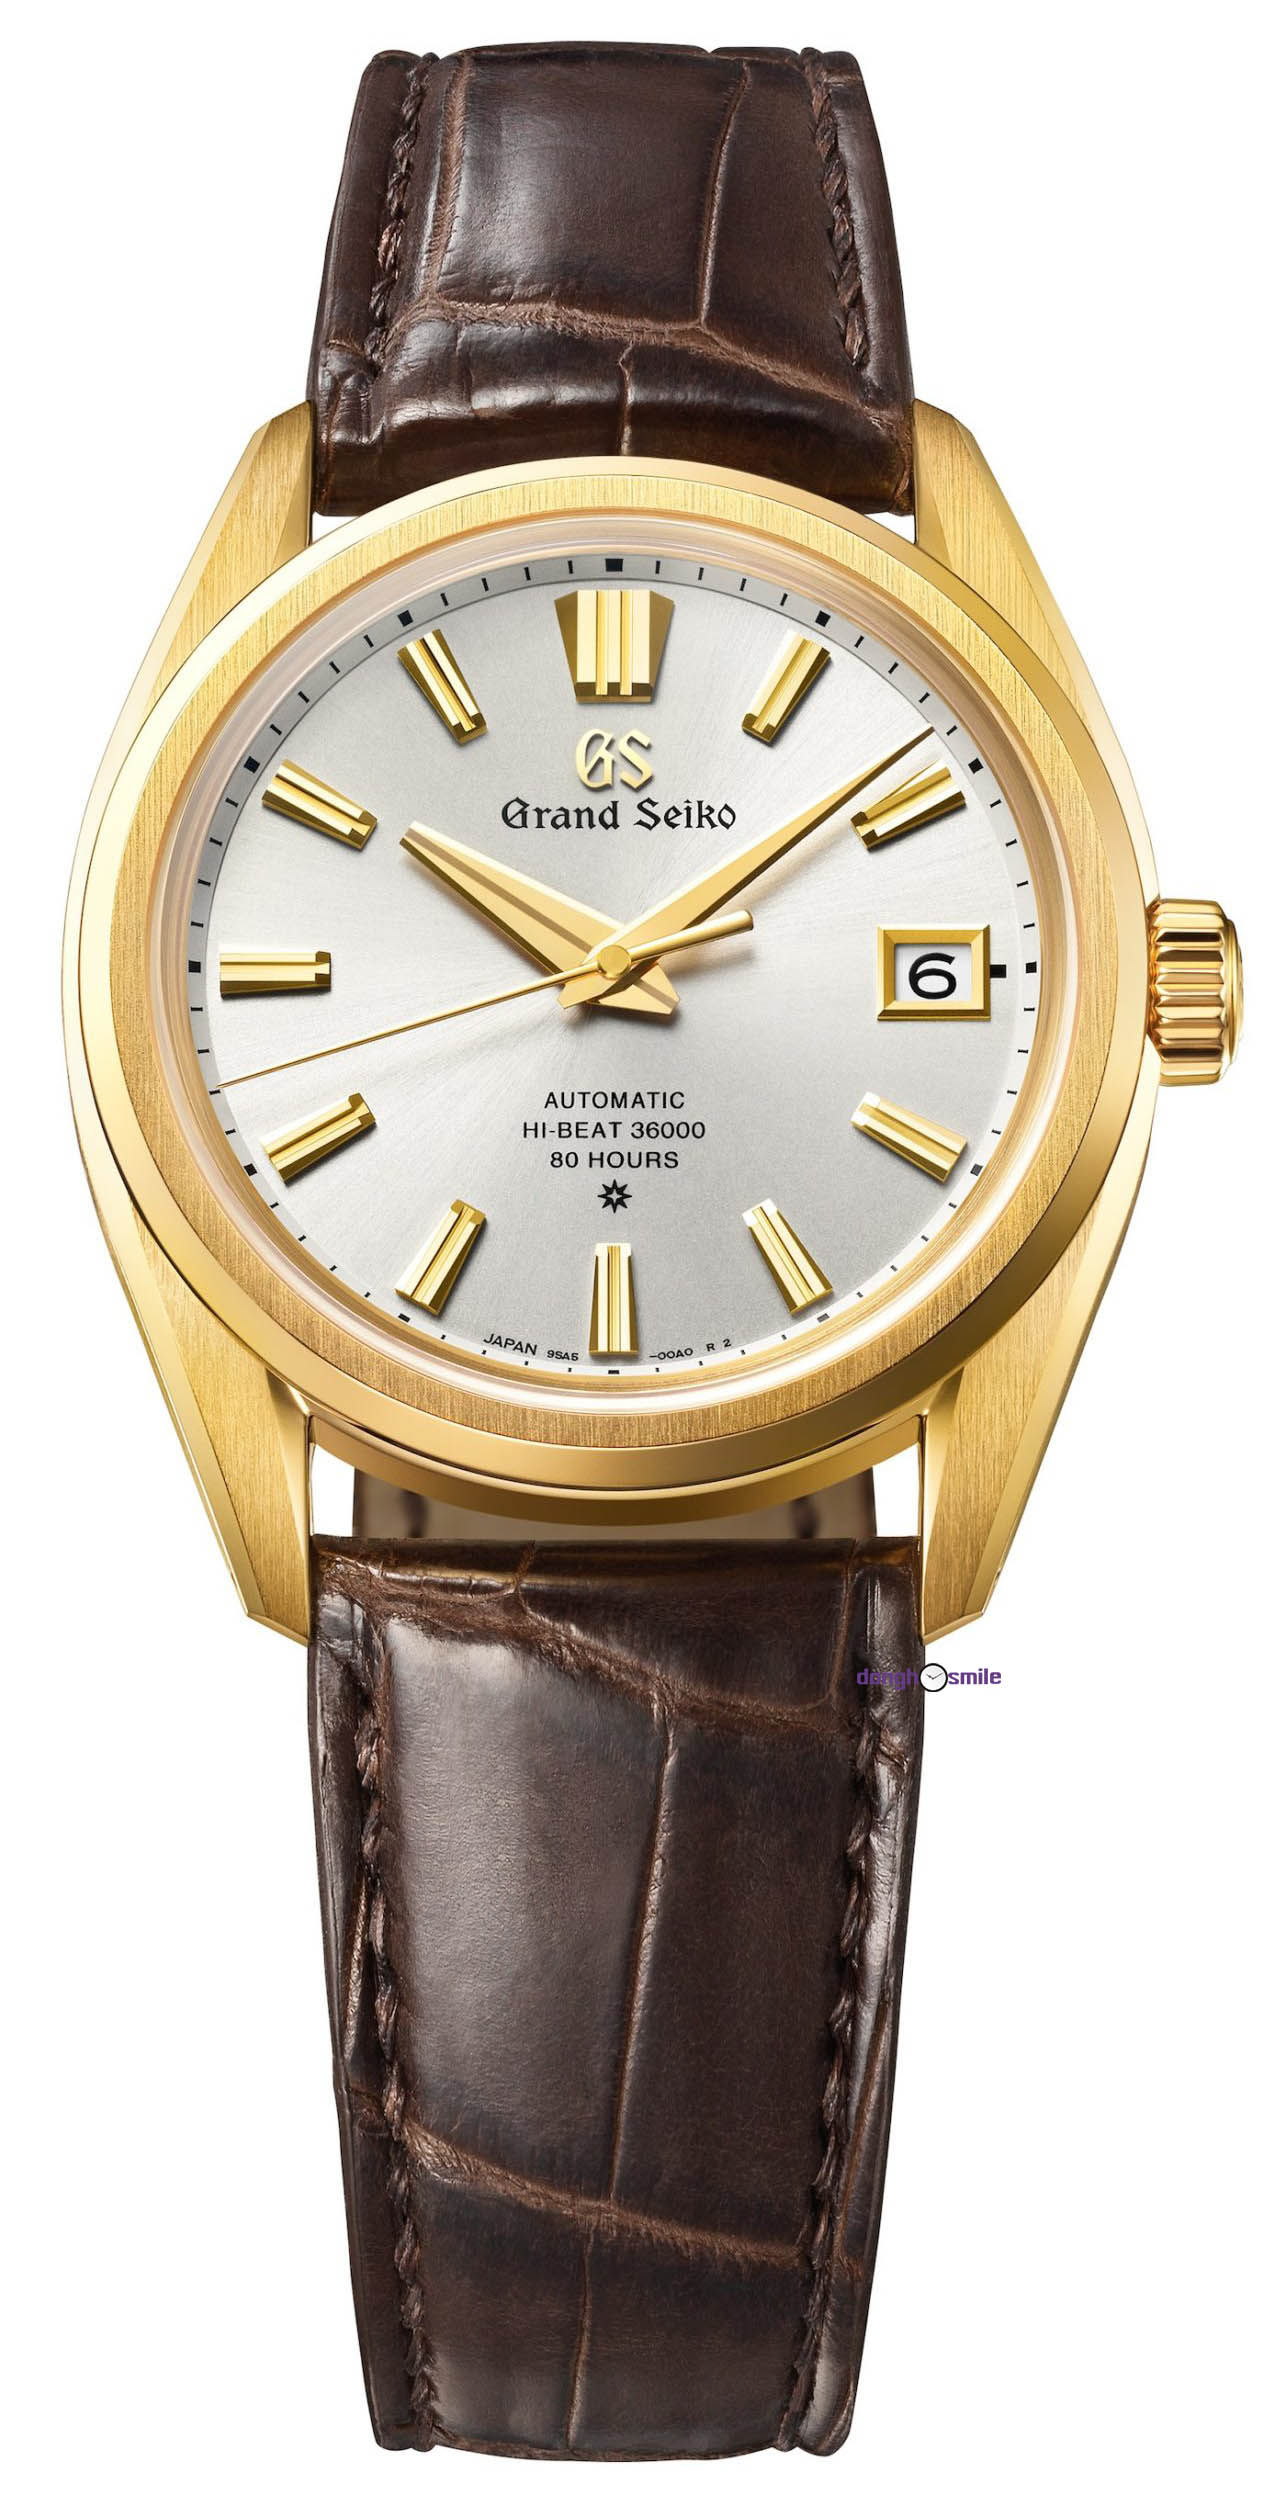 Đồng hồ Grand Seiko Hi-beat 36000 9SA5 SLGH002 kỉ niệm 60 năm